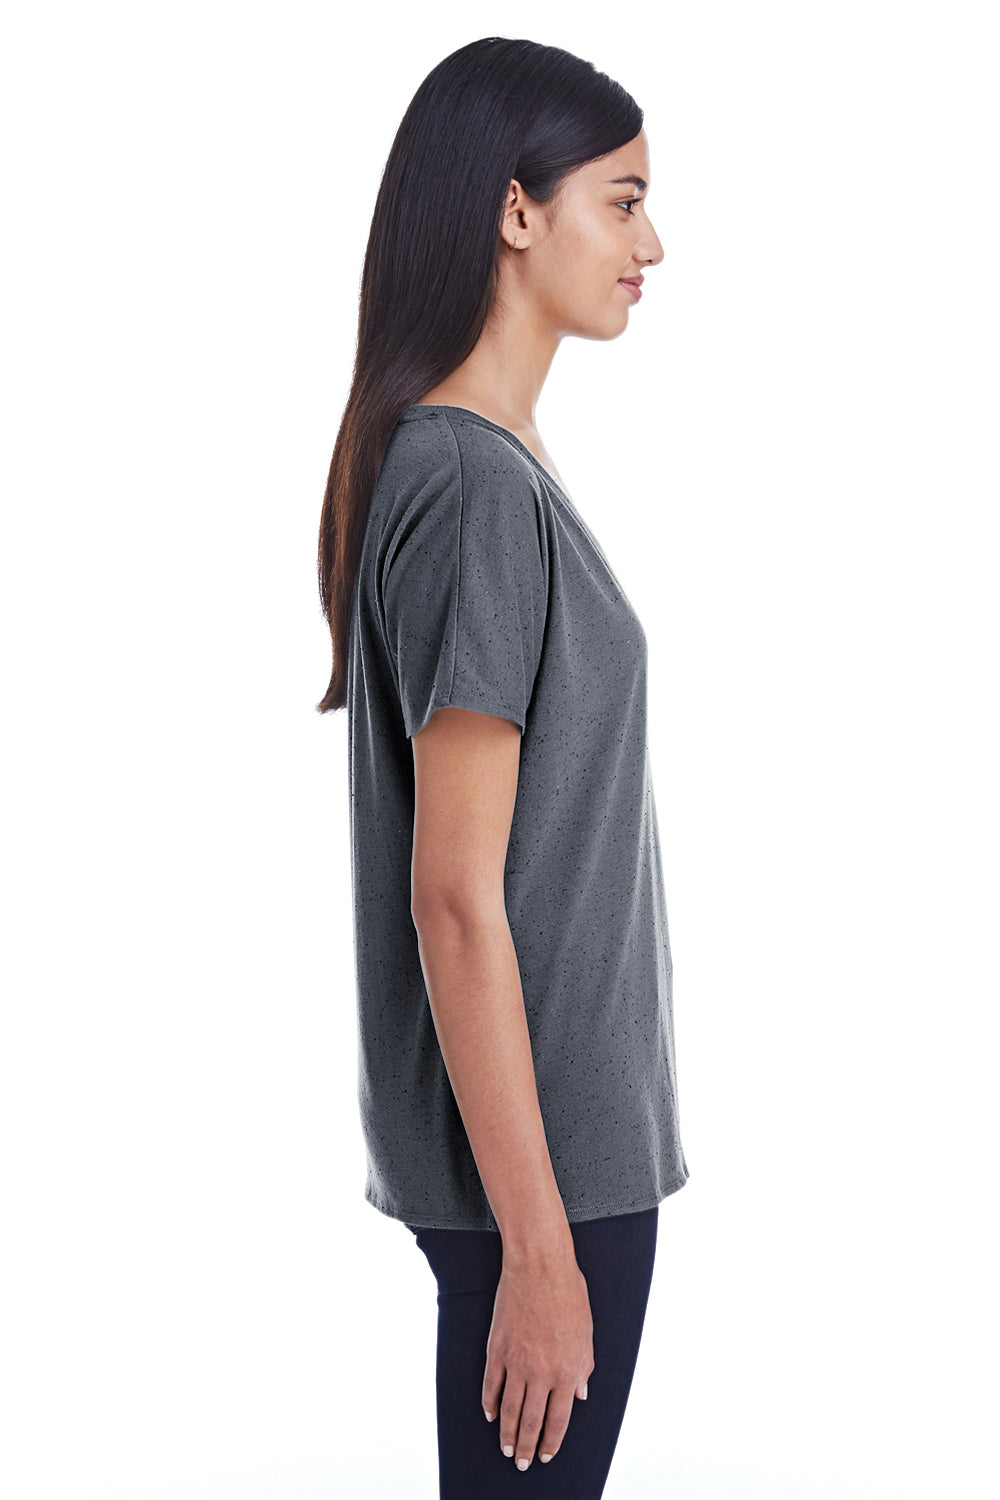 Threadfast Apparel 203FV Womens Fleck Short Sleeve V-Neck T-Shirt Charcoal Grey Side